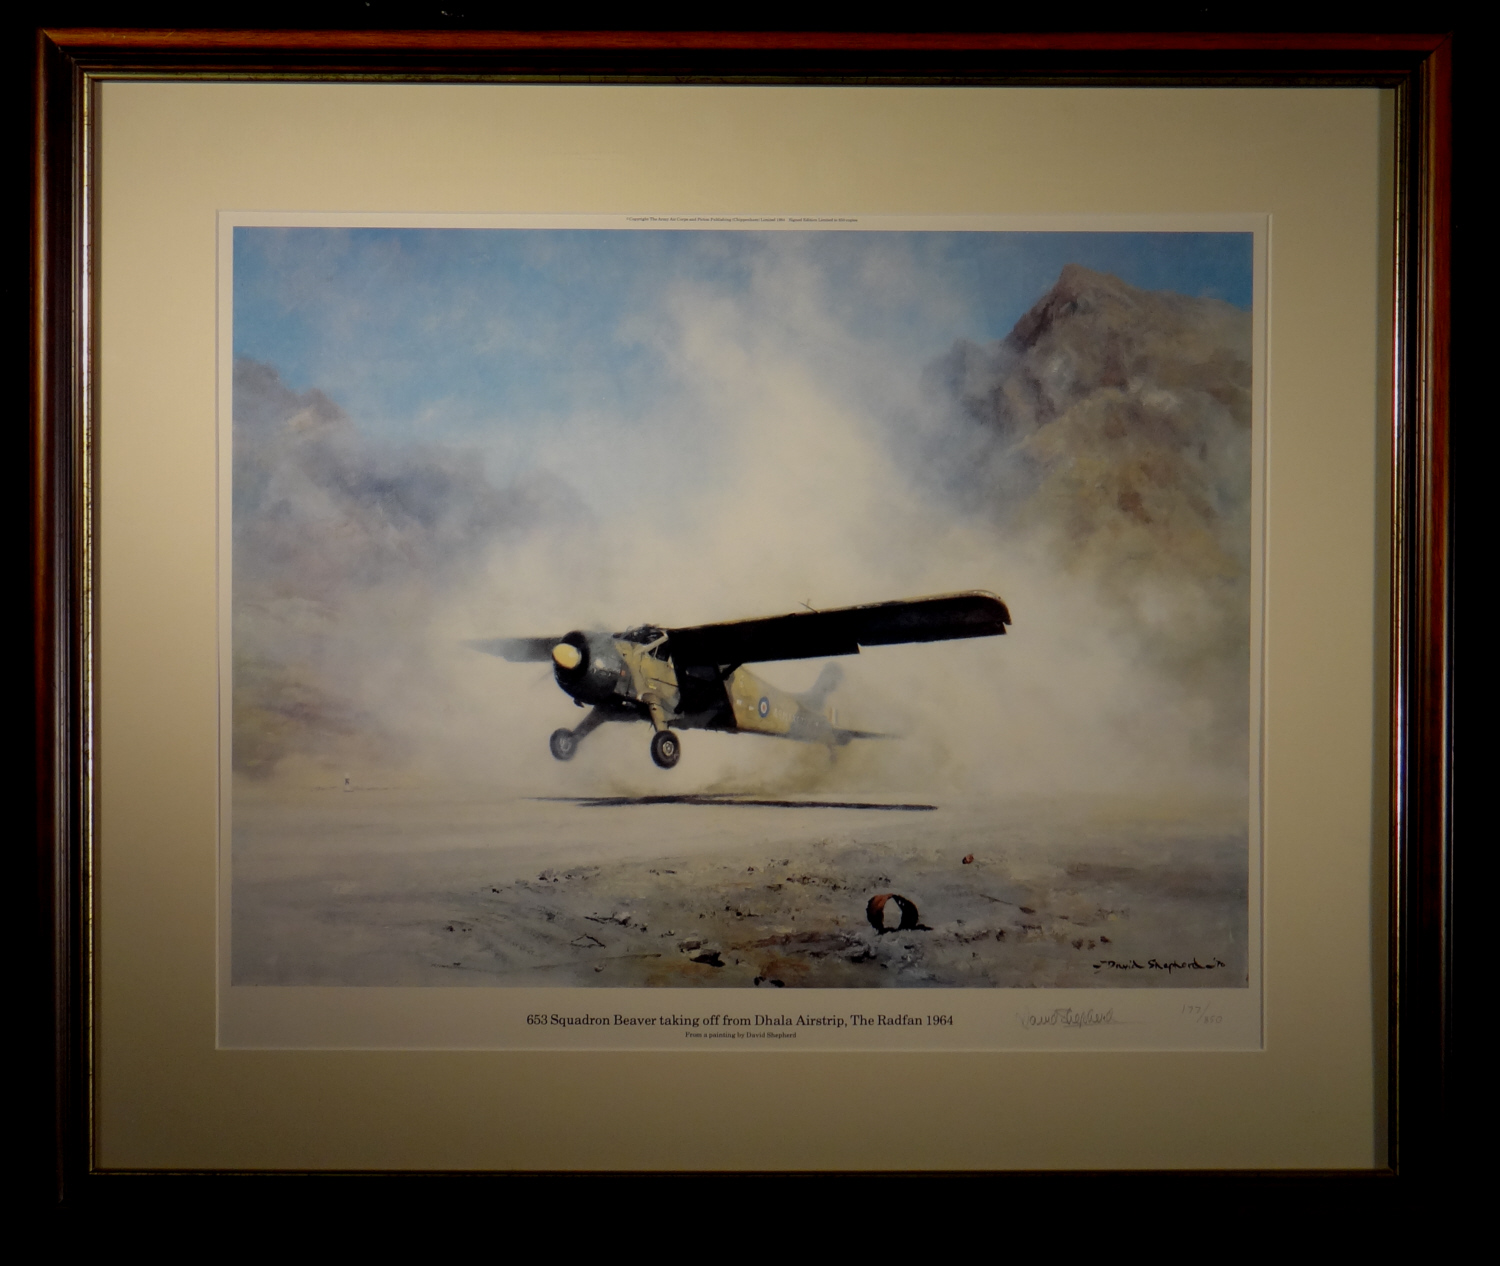 shepherd, 653 squadron beaver, Dhala airstrip, The Radfan, 1964, aviation